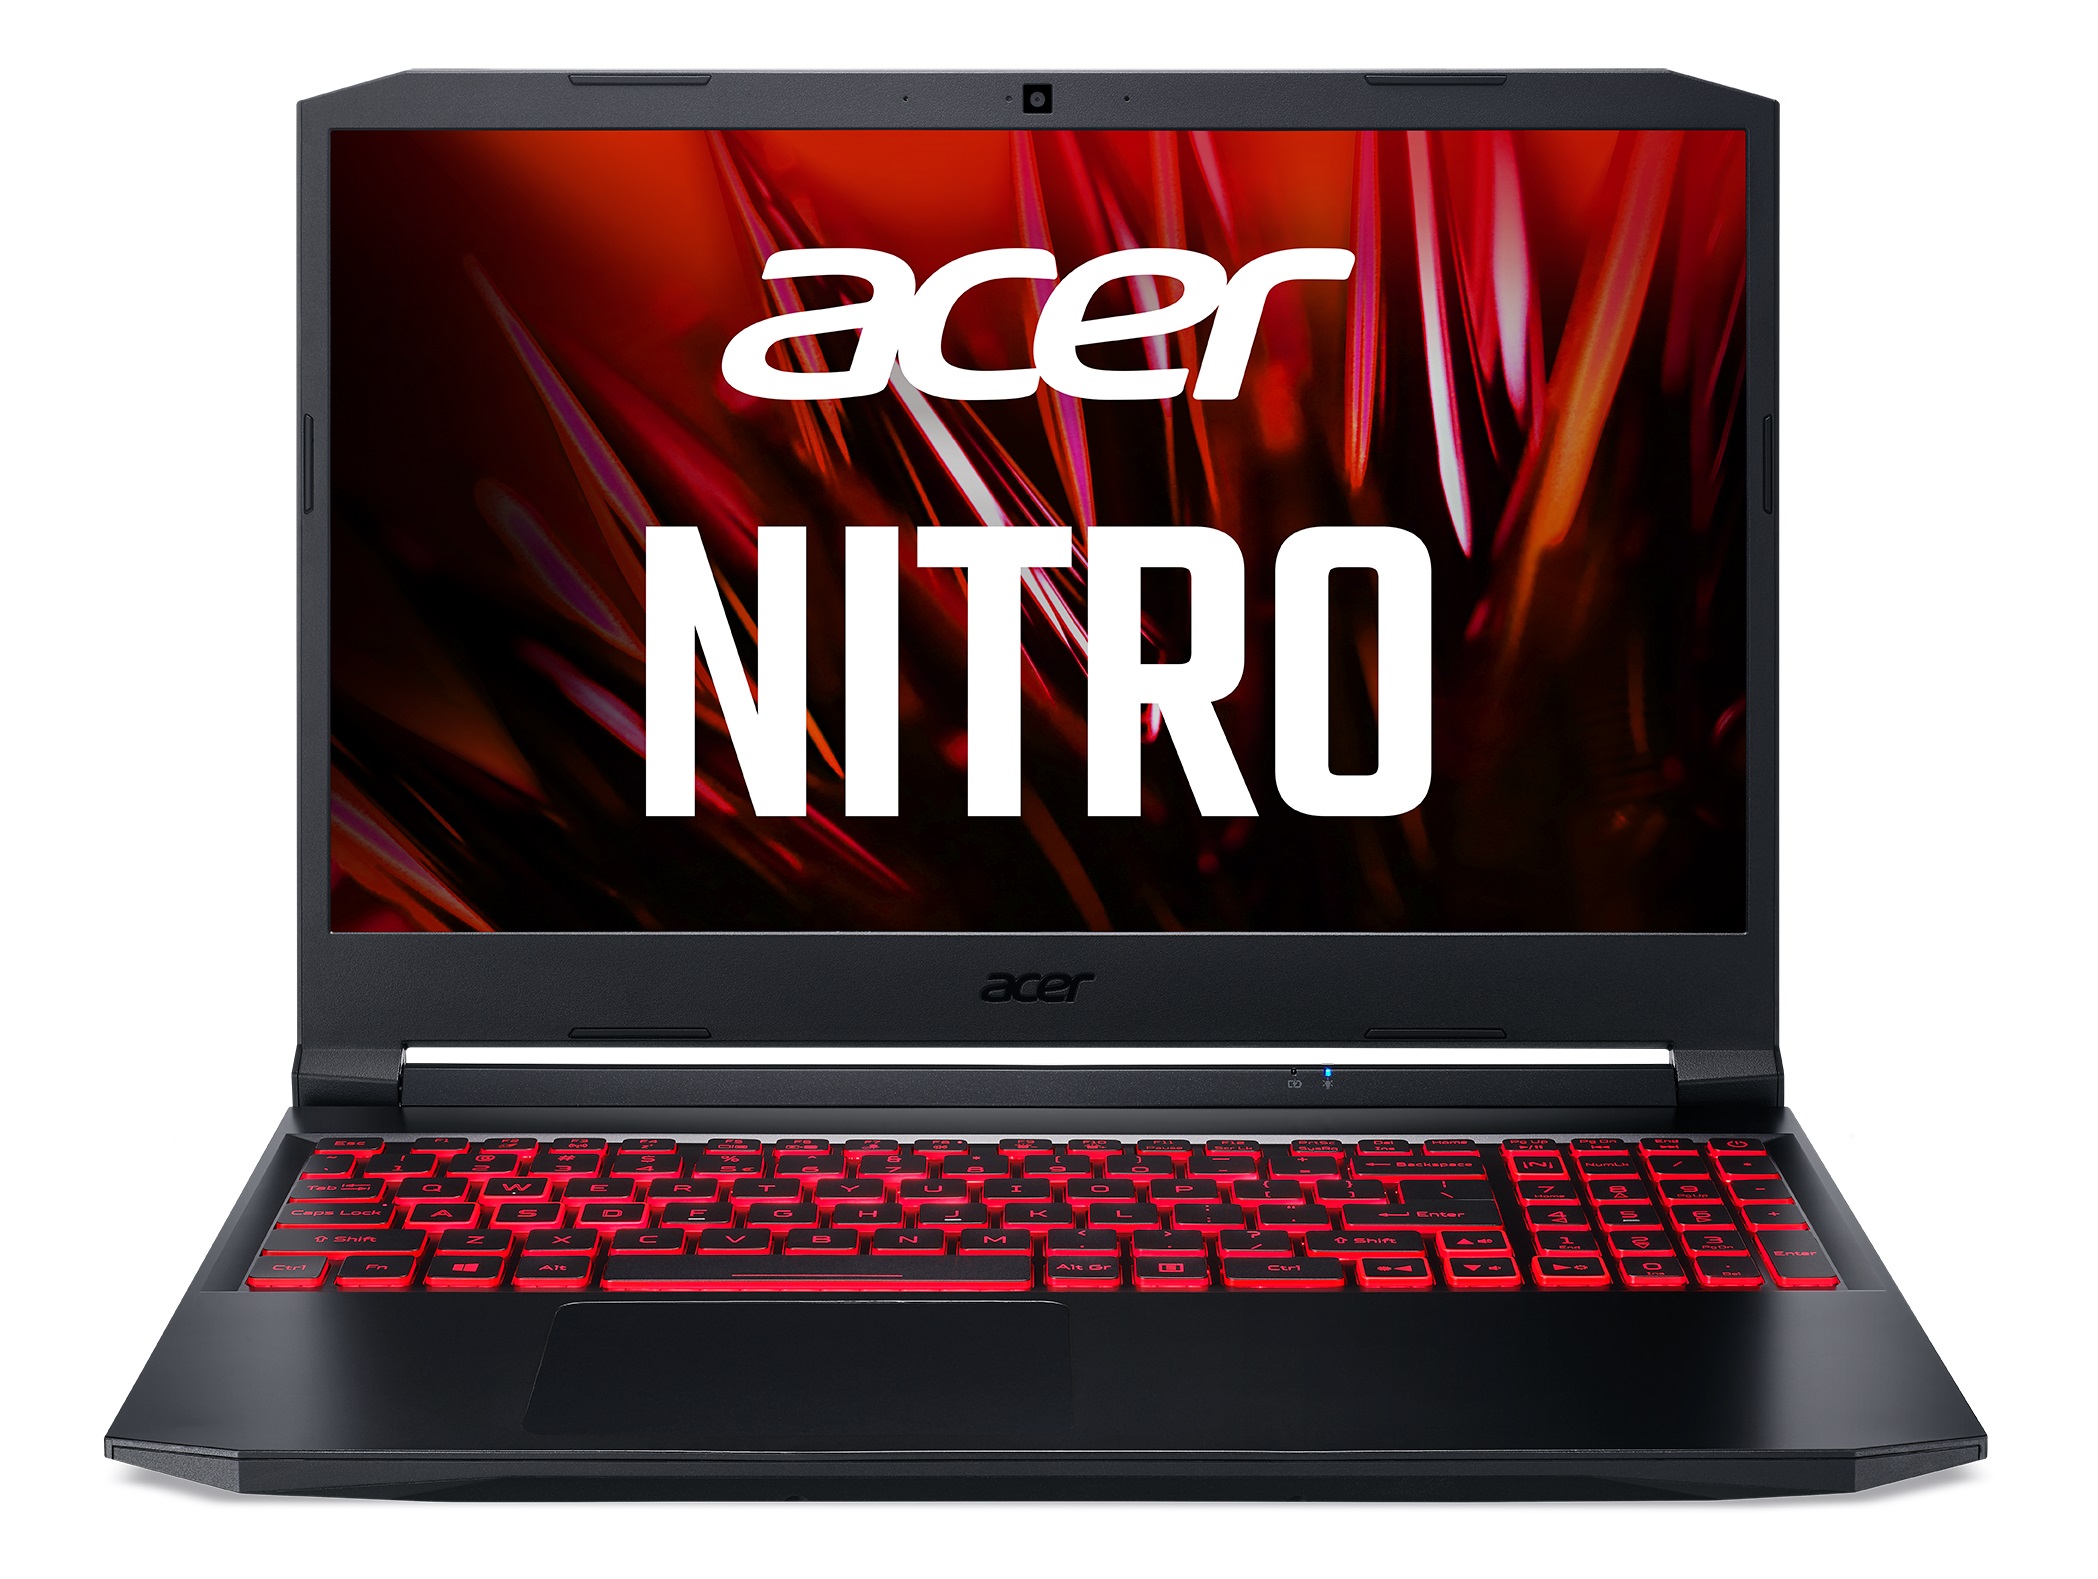 Horizon Zero Dawn Acer Nitro 5 GTX - 1650 i5 9300H 16GB RAM 